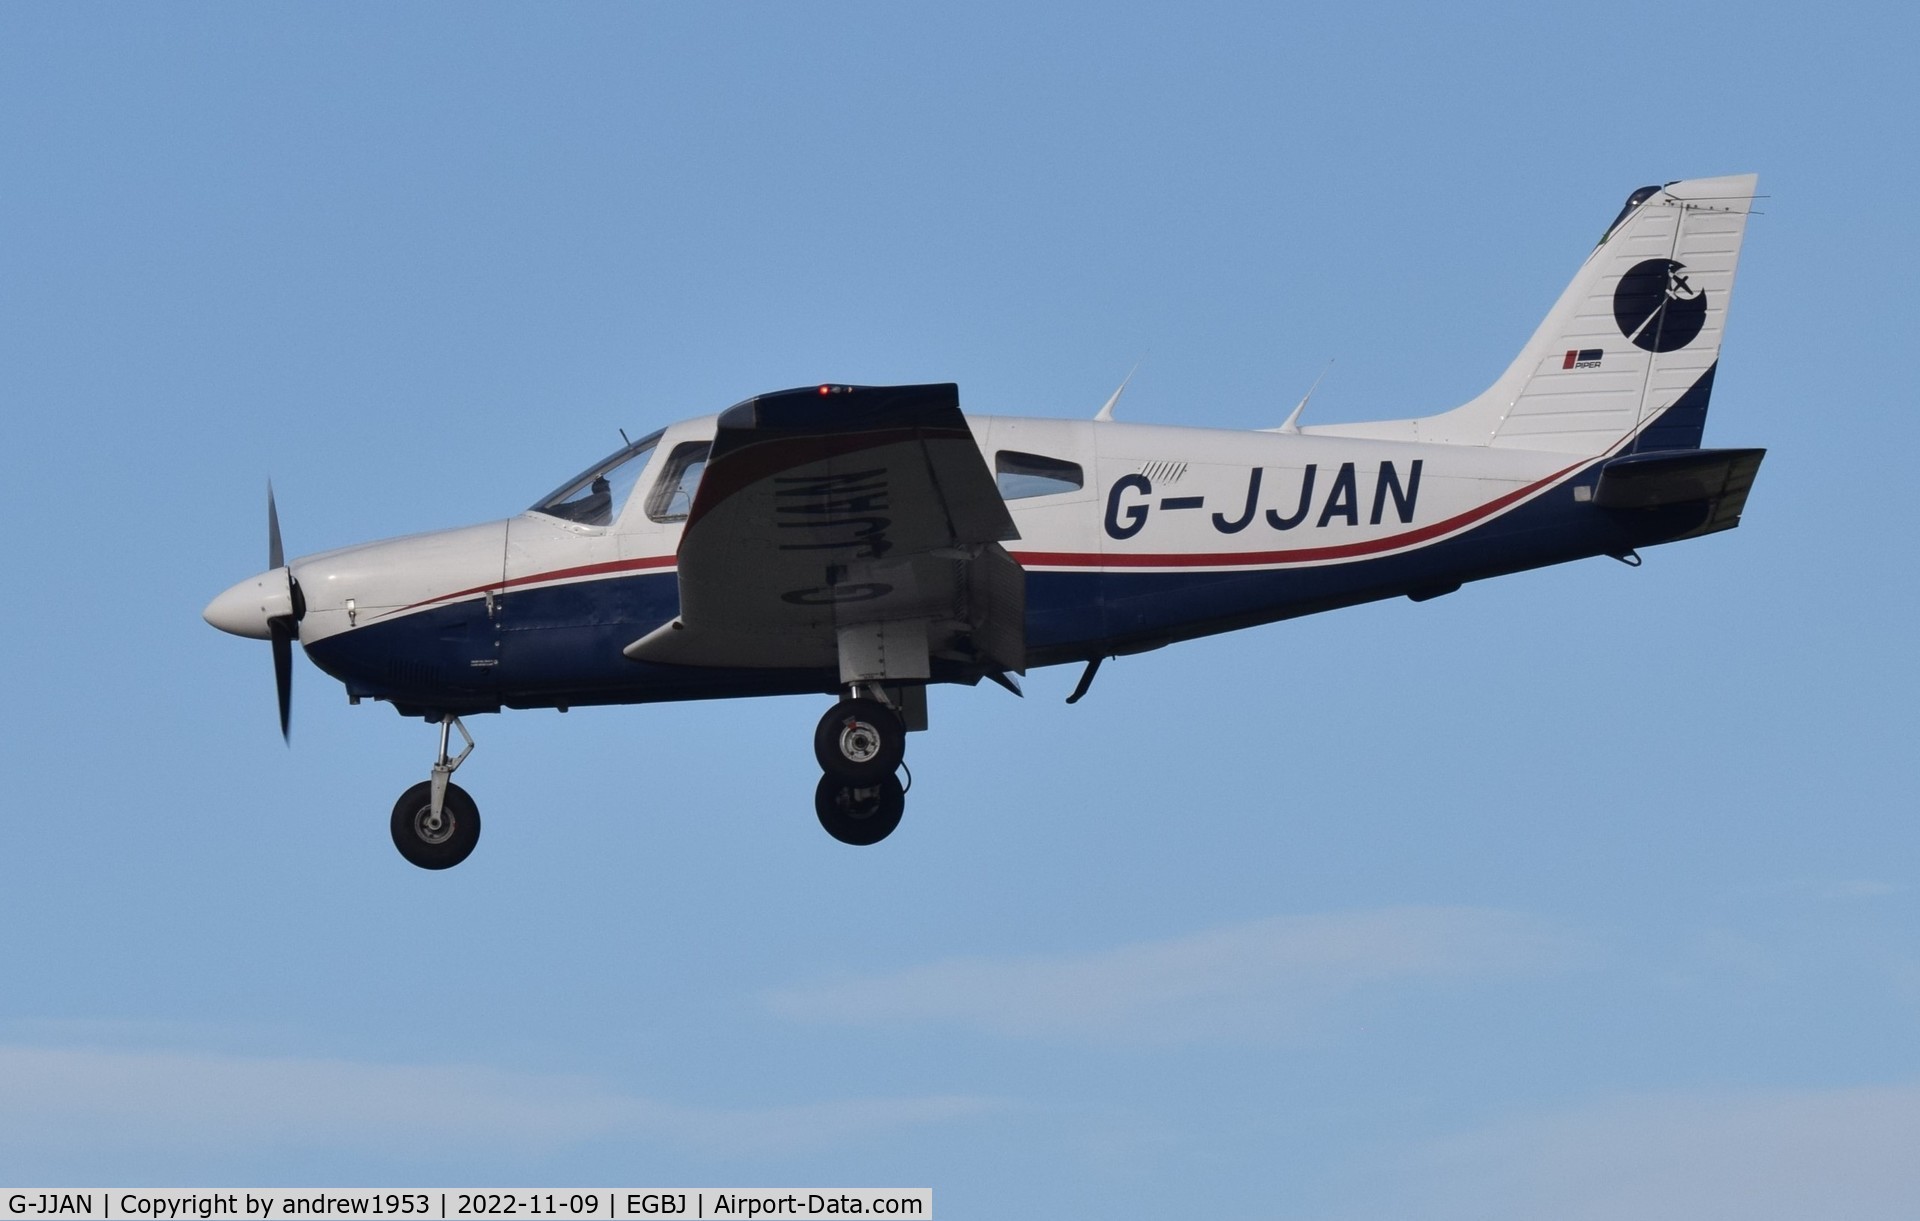 G-JJAN, 1986 Piper PA-28-181 Cherokee Archer II C/N 28-90007, G-JJAN at Gloucestershire Airport.